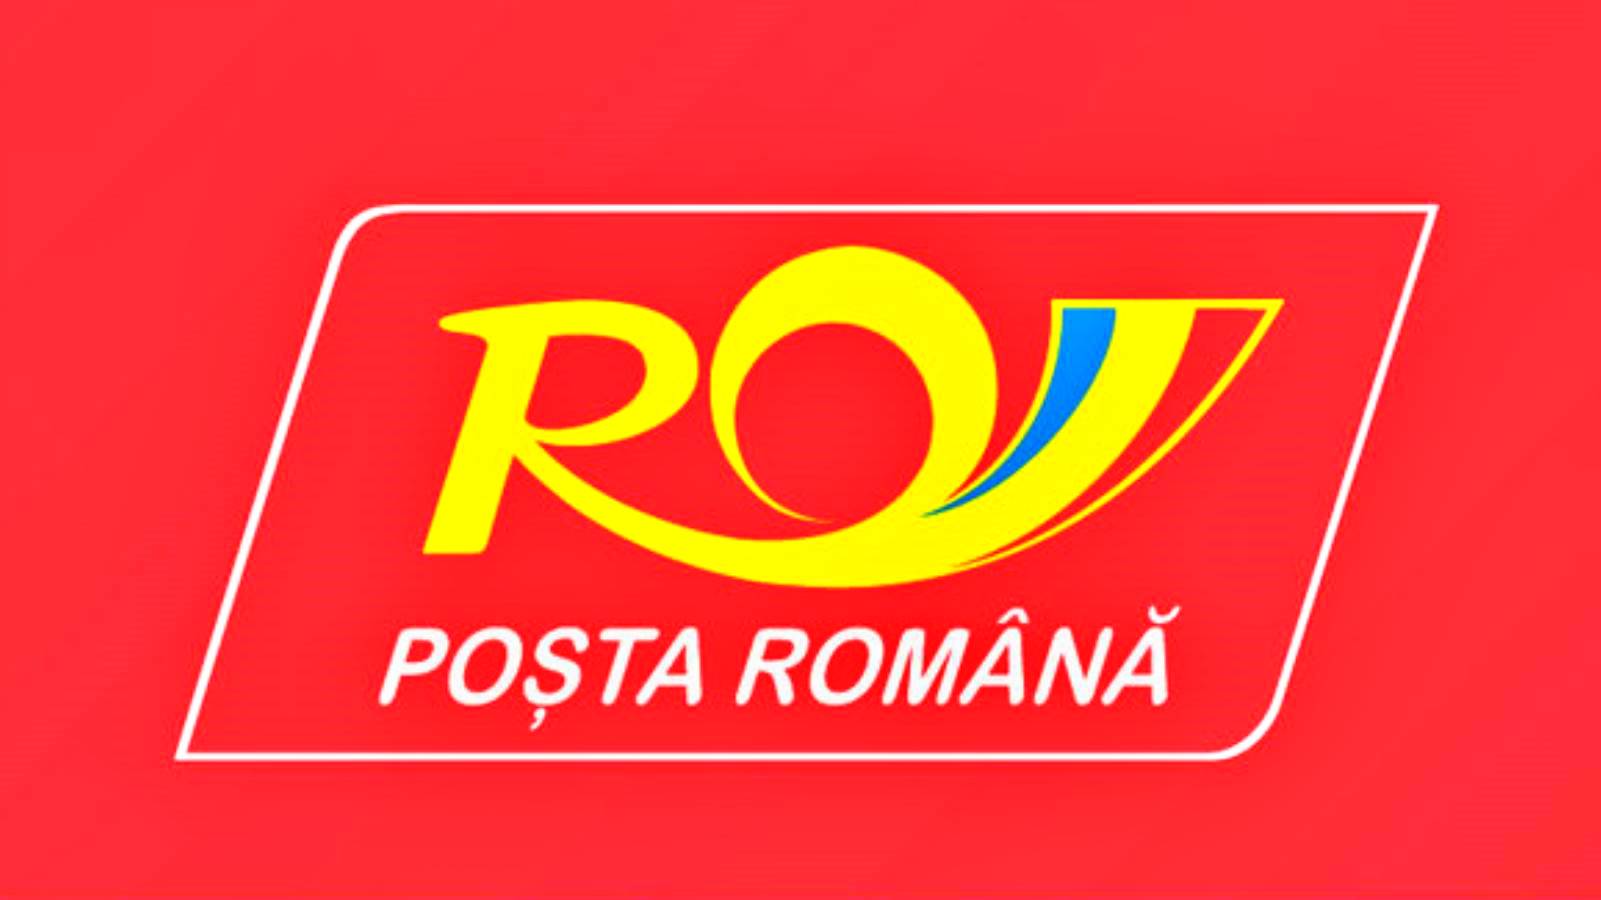 Romanian post ultrapost tutkimusmatkat